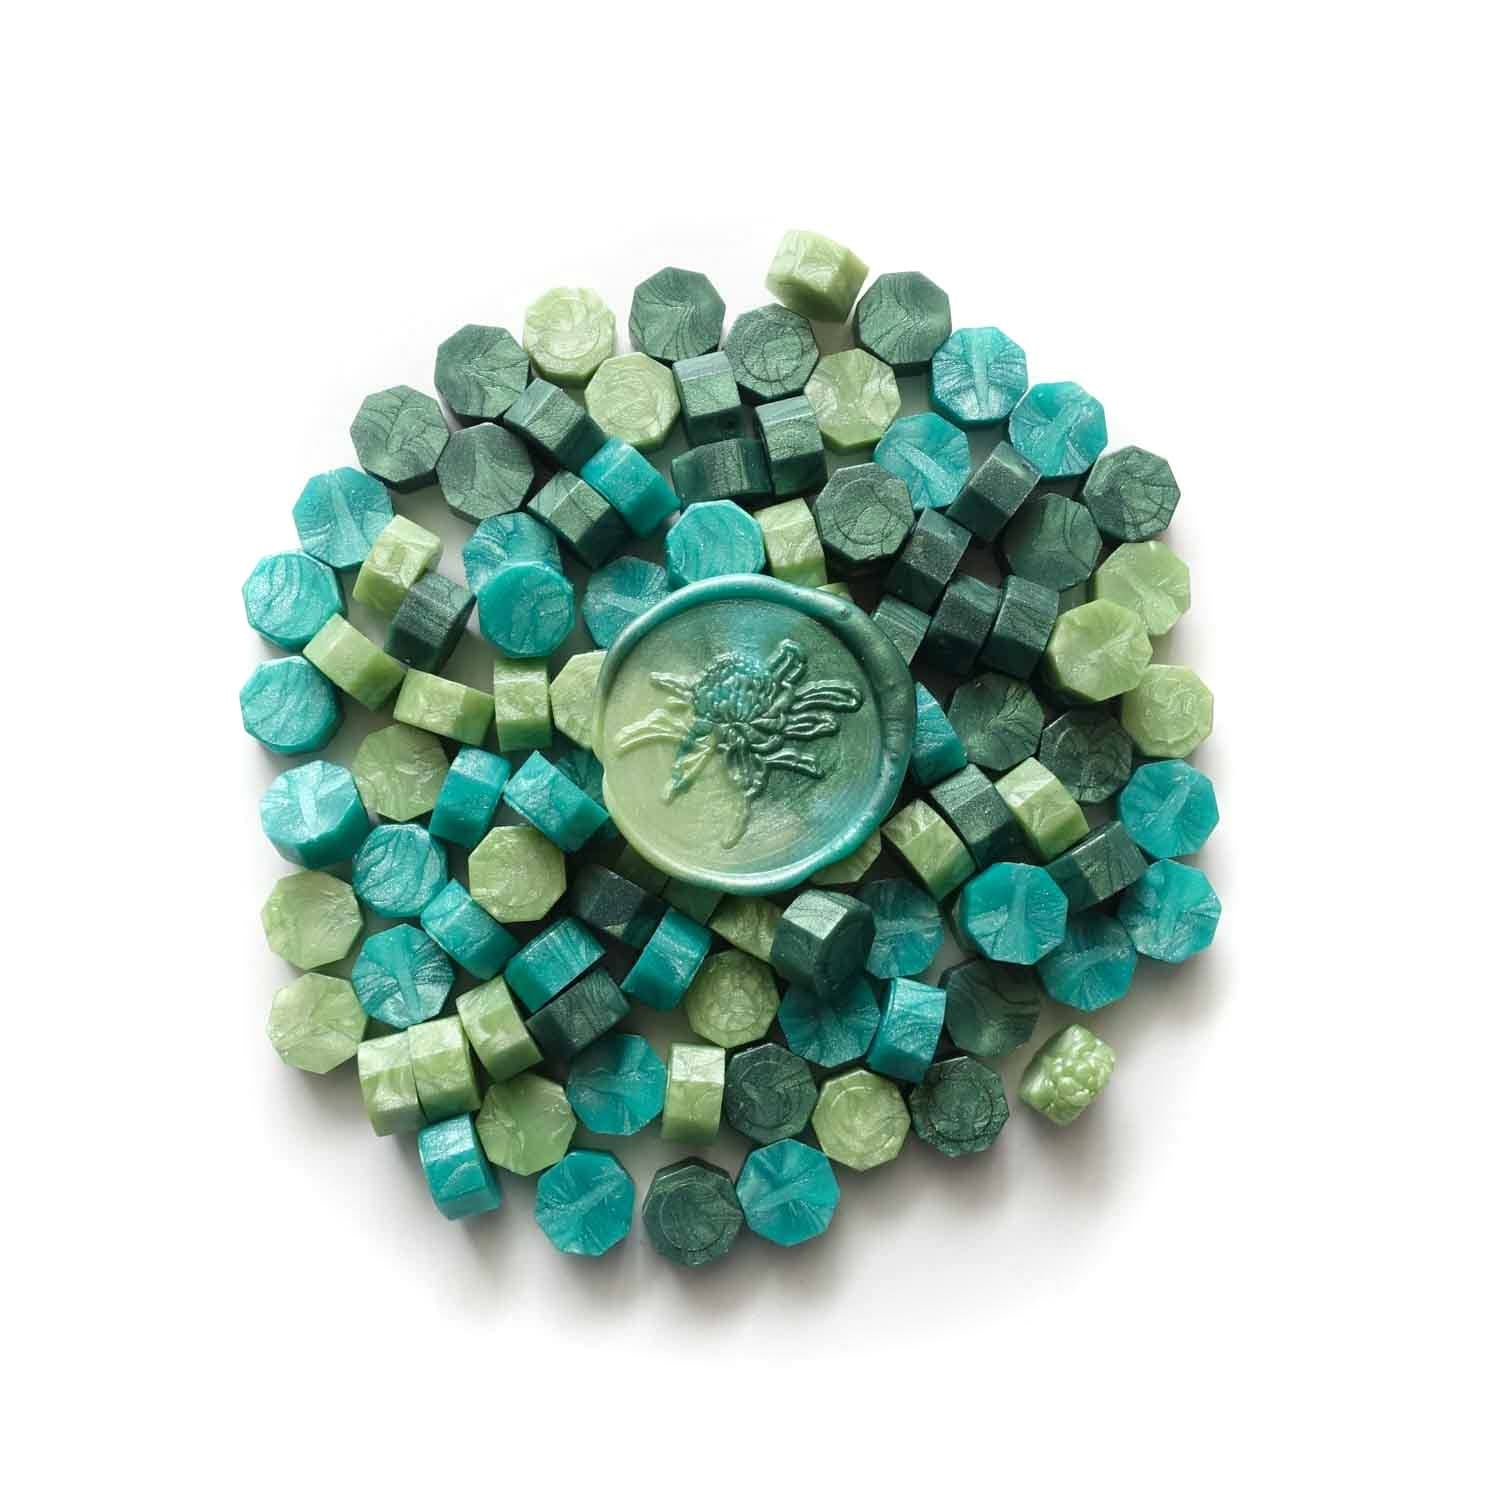 Mixed apple forest aqua green sealing wax seal beads pellets Melbourne Sydney Australia envelopes